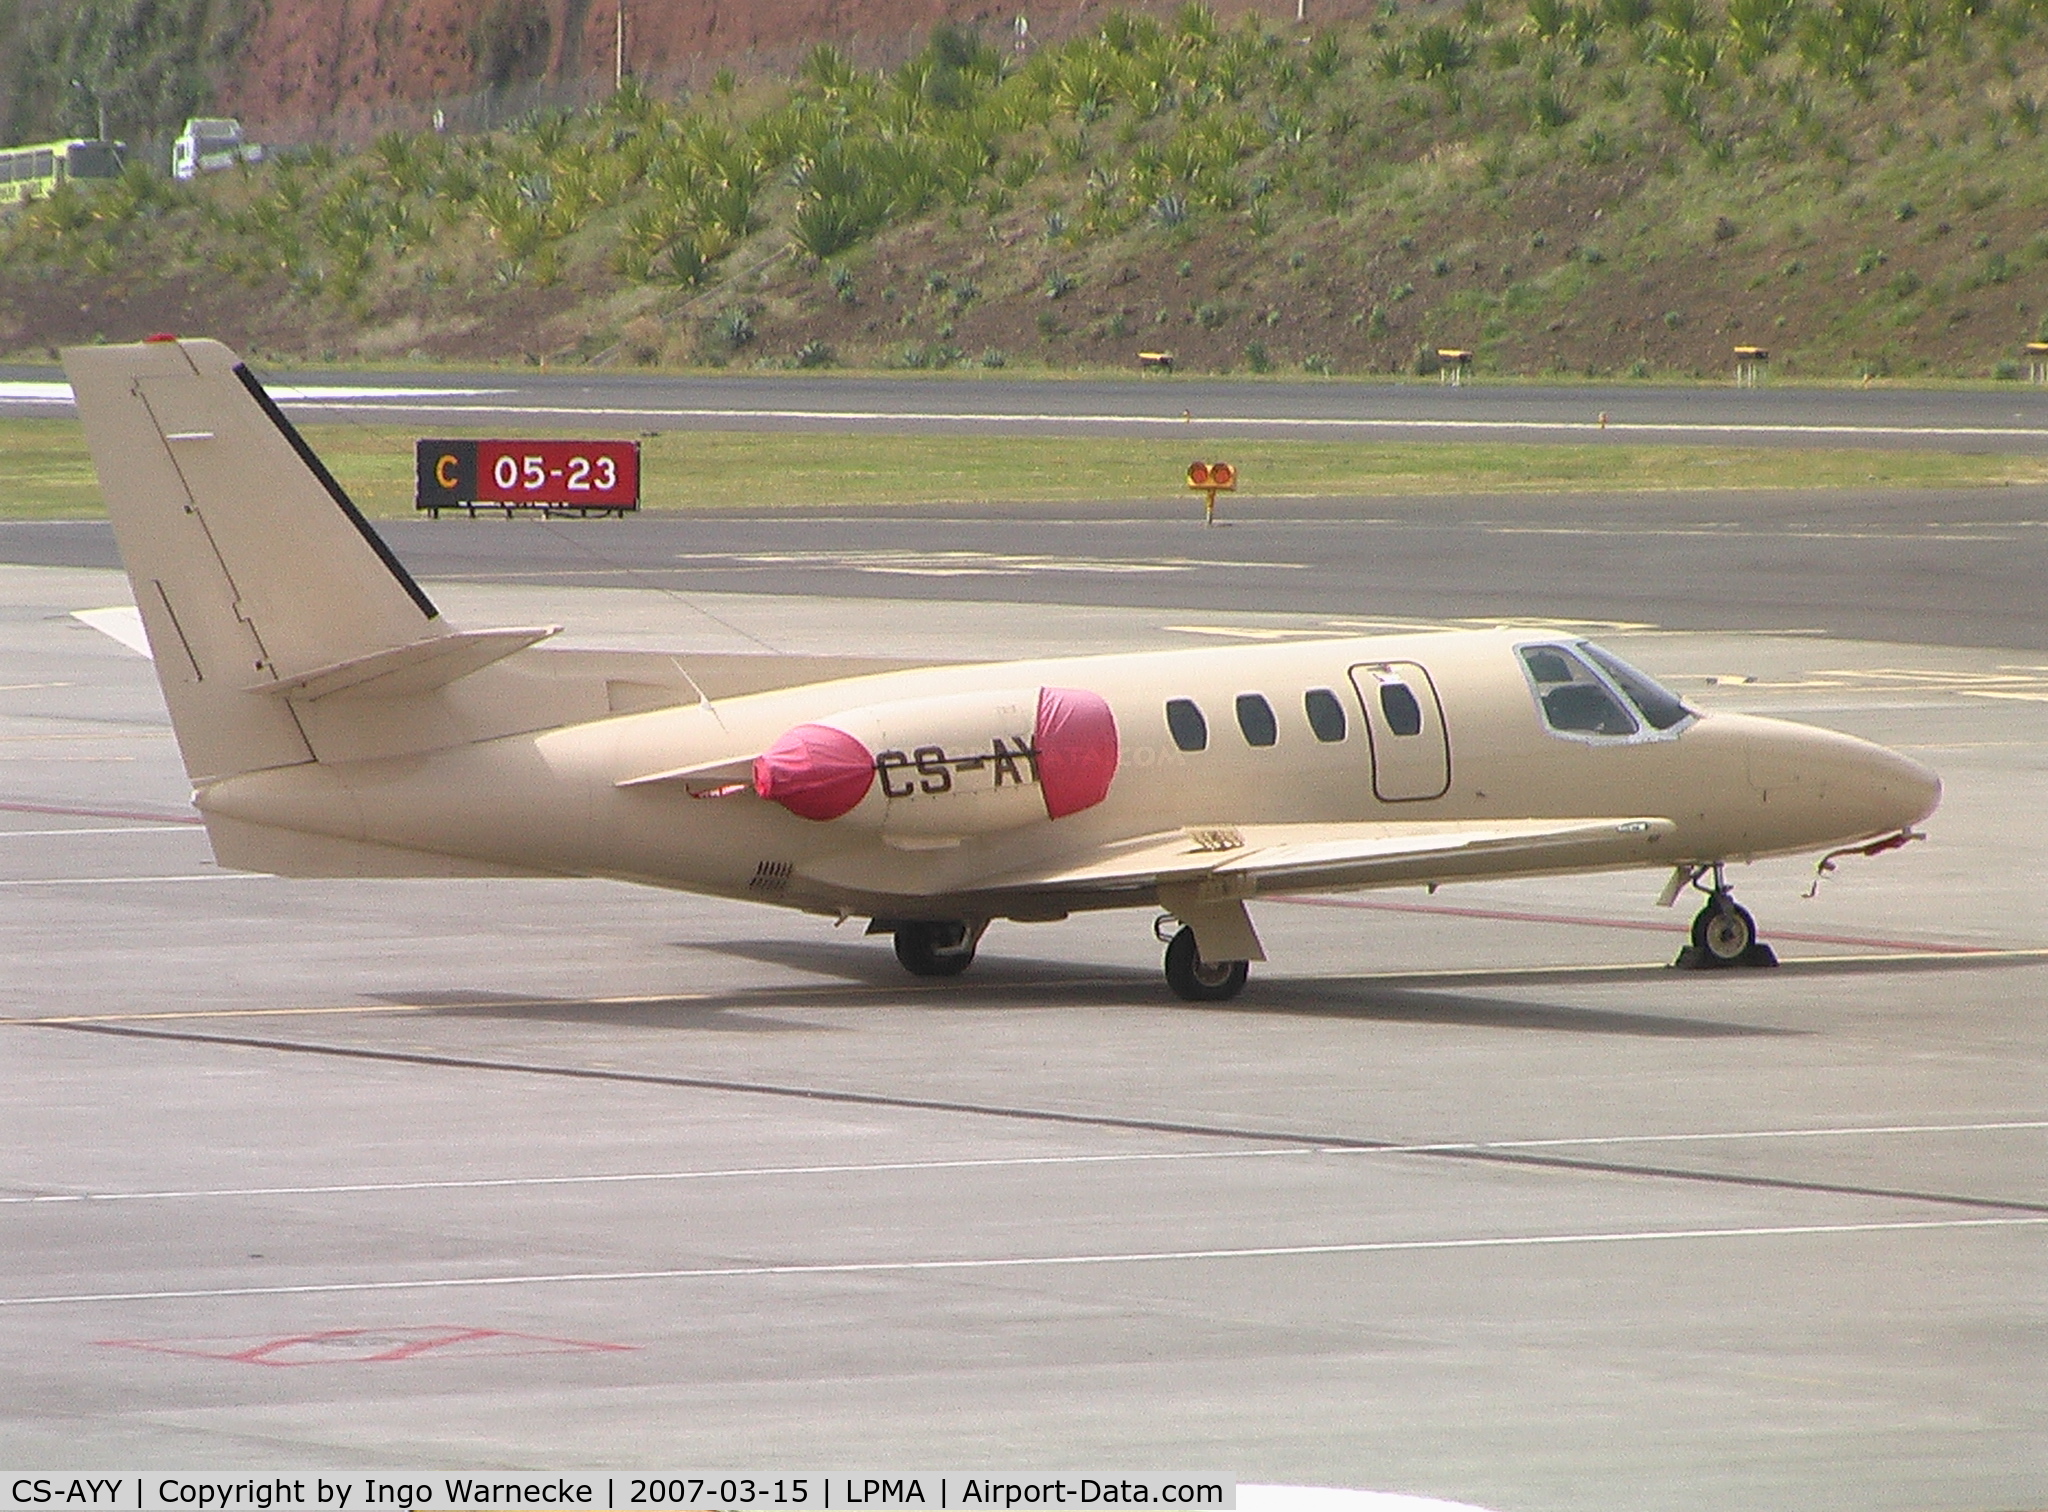 CS-AYY, 1980 Cessna 501 Citation I/SP C/N 501-0183, Cessna 501 Citation I/SP at Madeira Airport